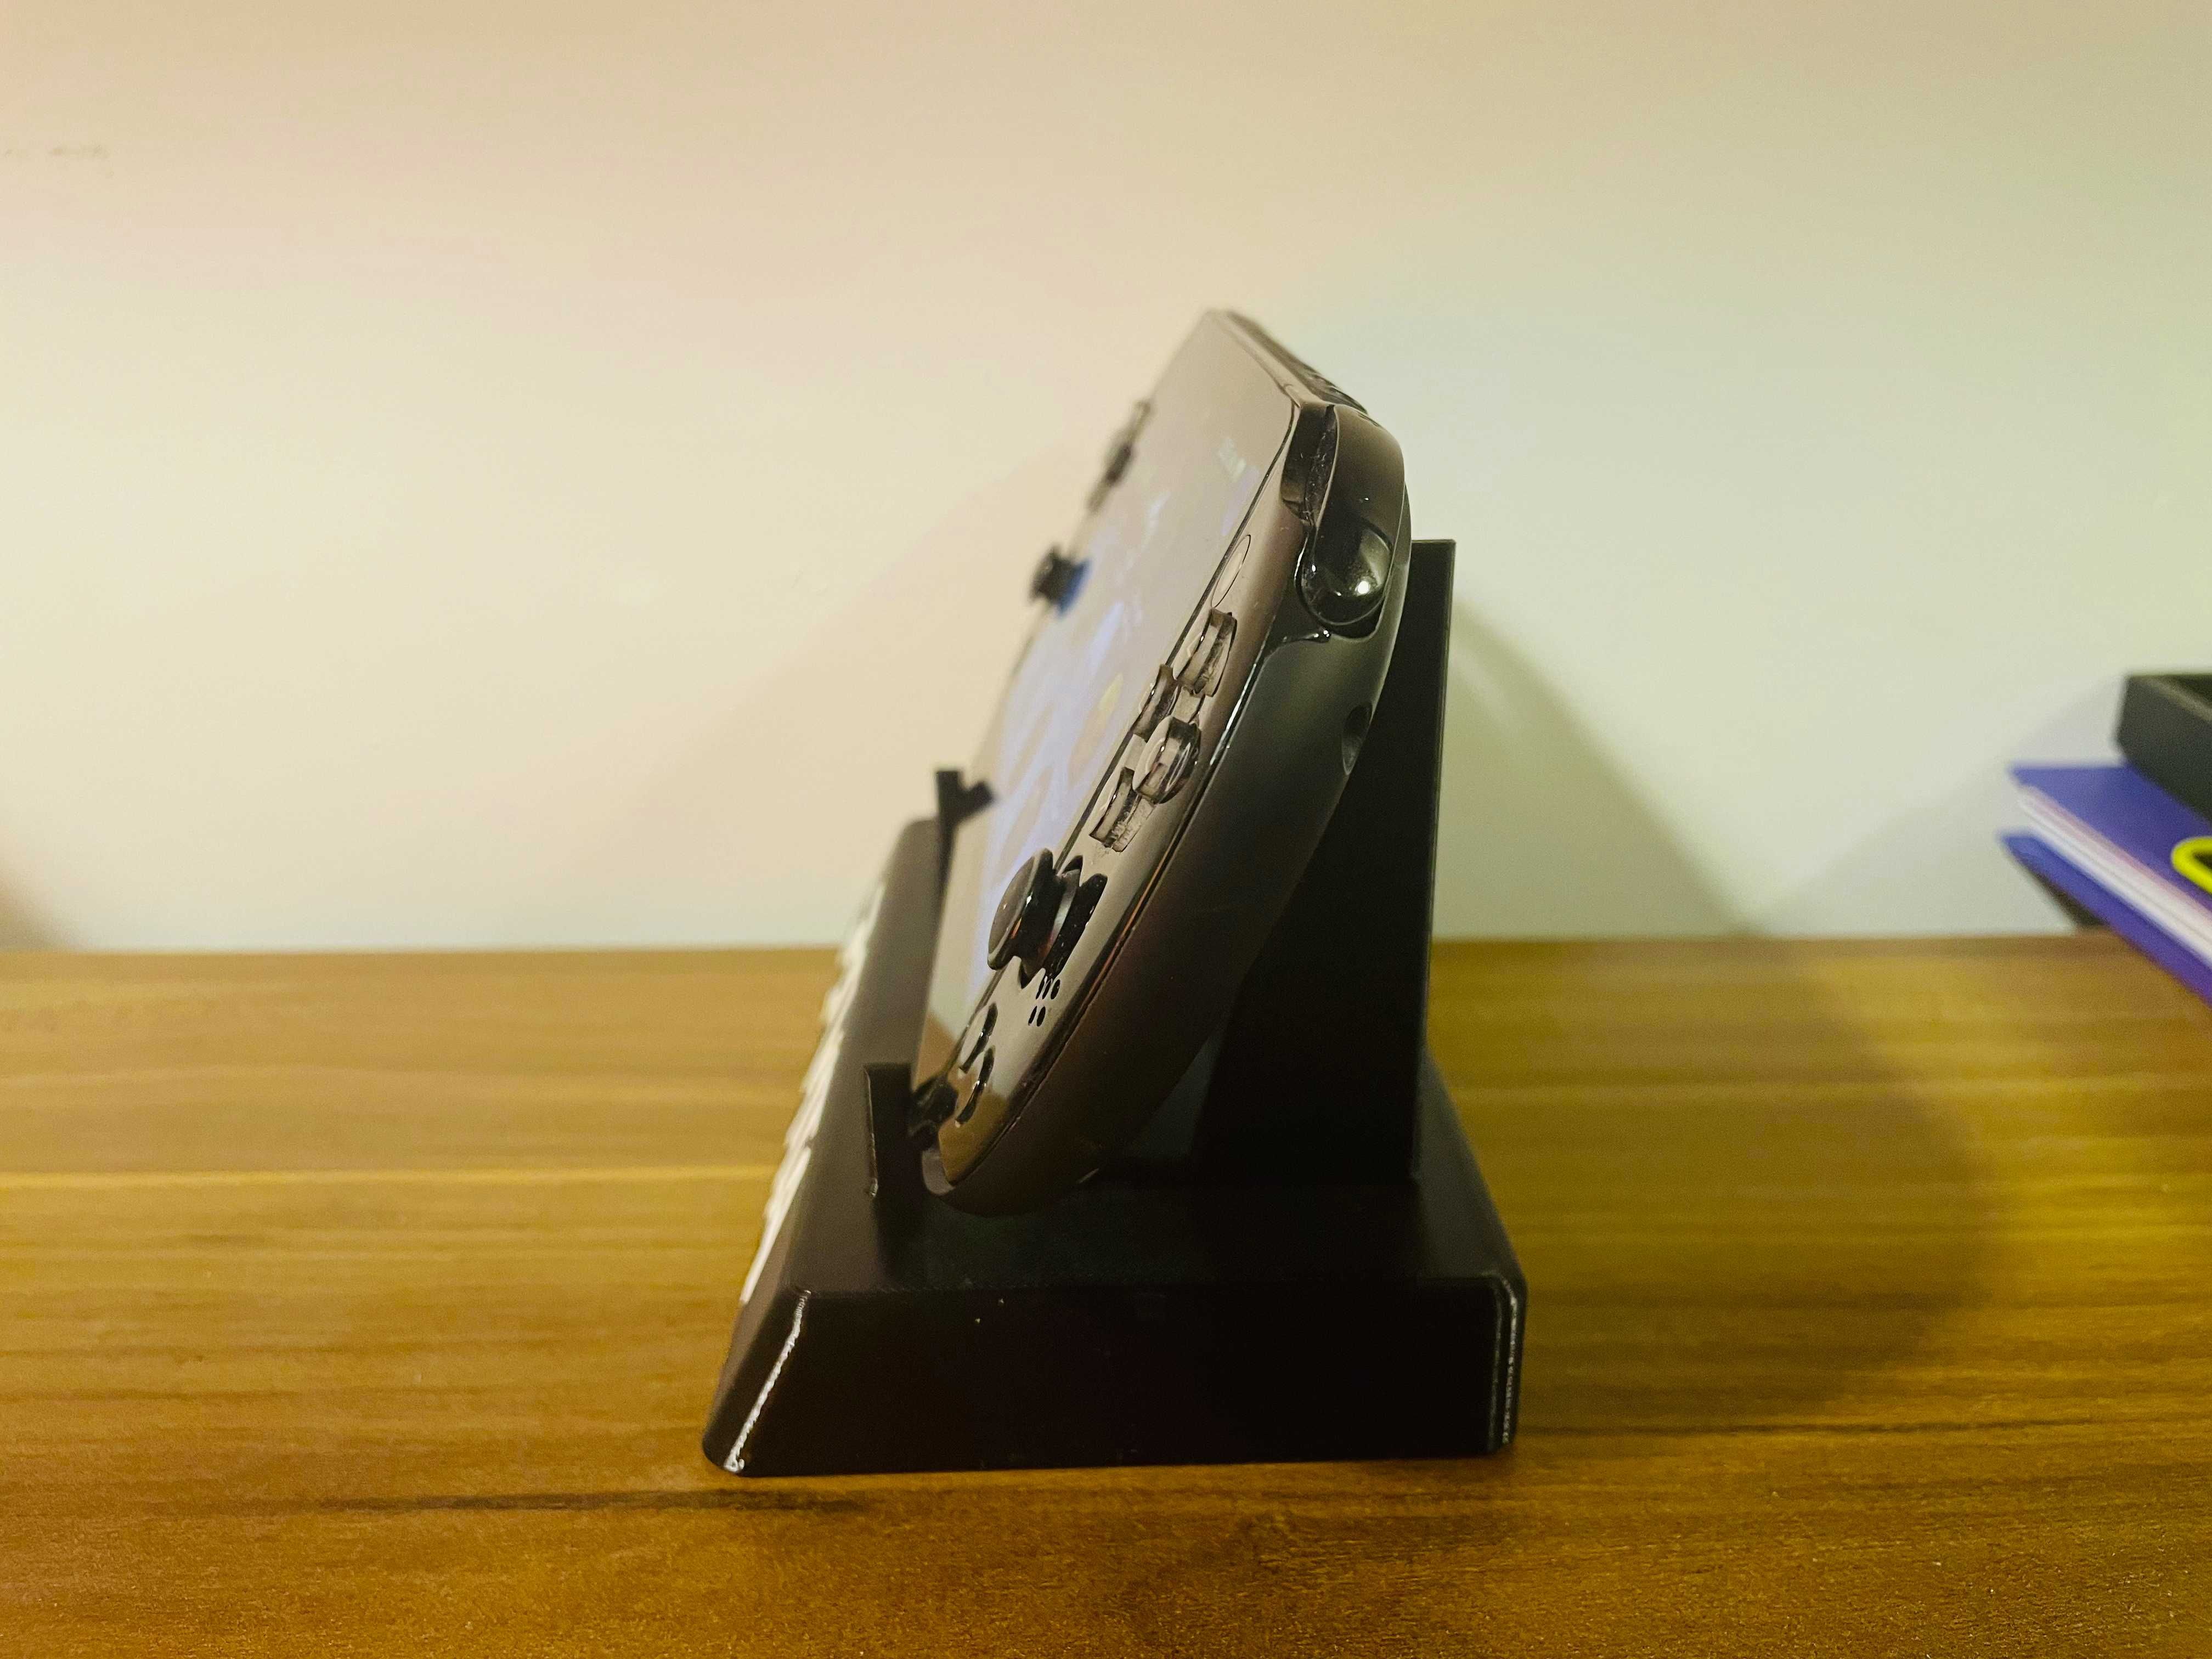 PS Vita - Vand suport tip stand pentru consola (Playstation Vita)